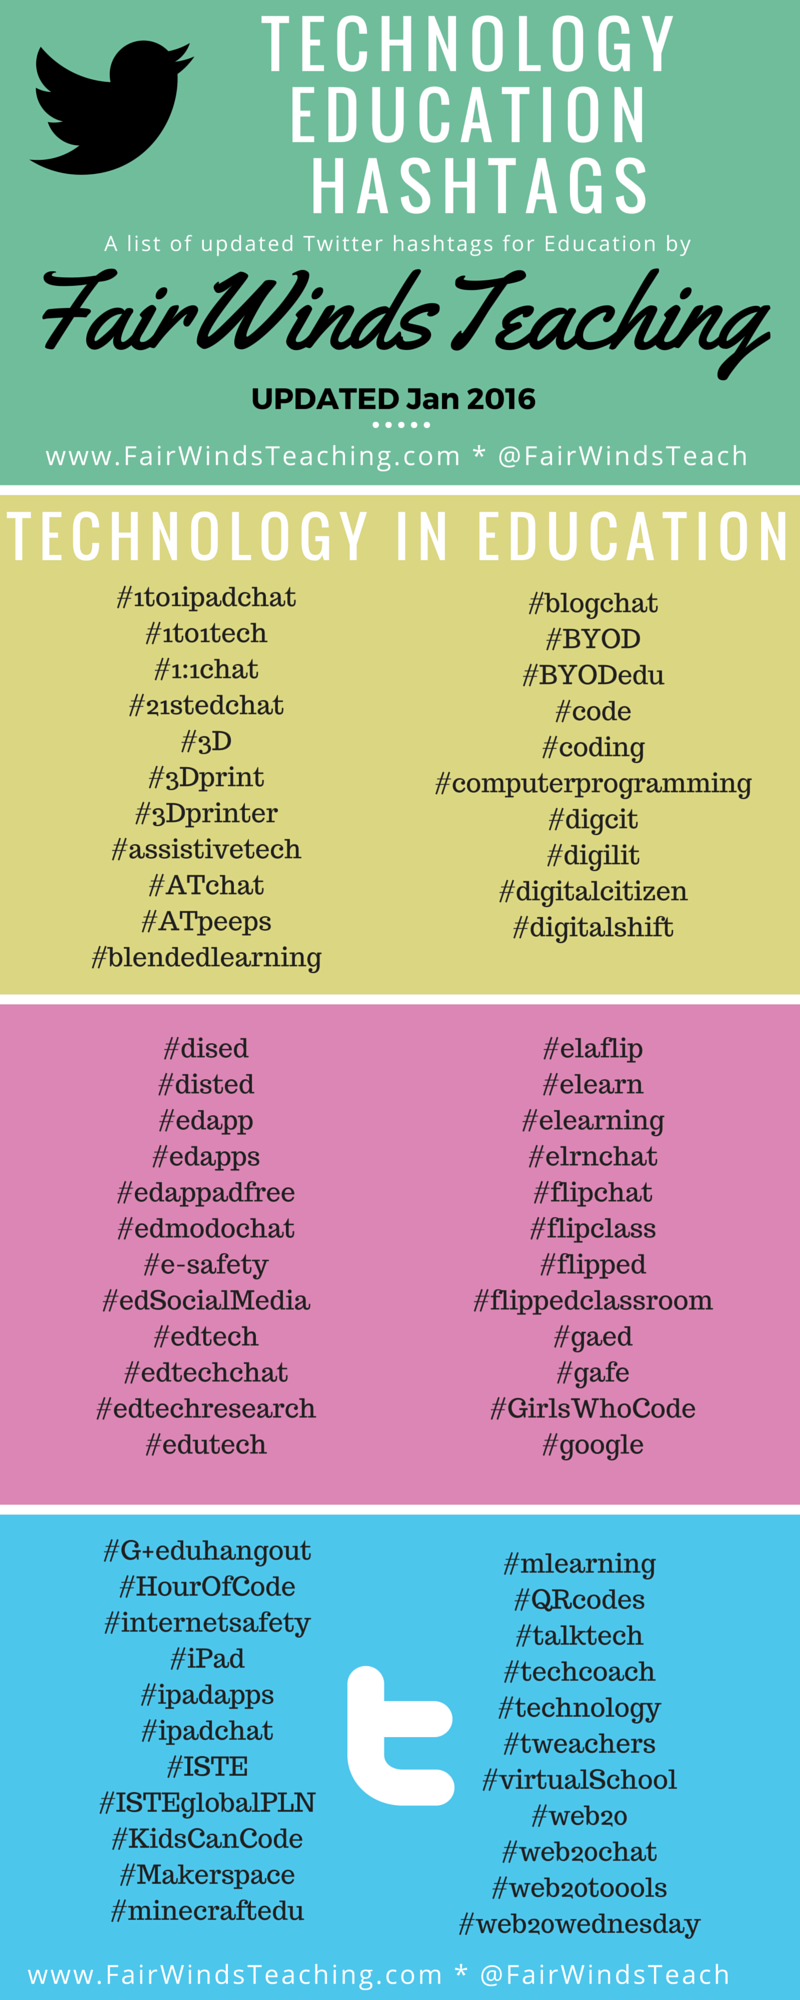 Education Hashtags 2 - Technology (1)